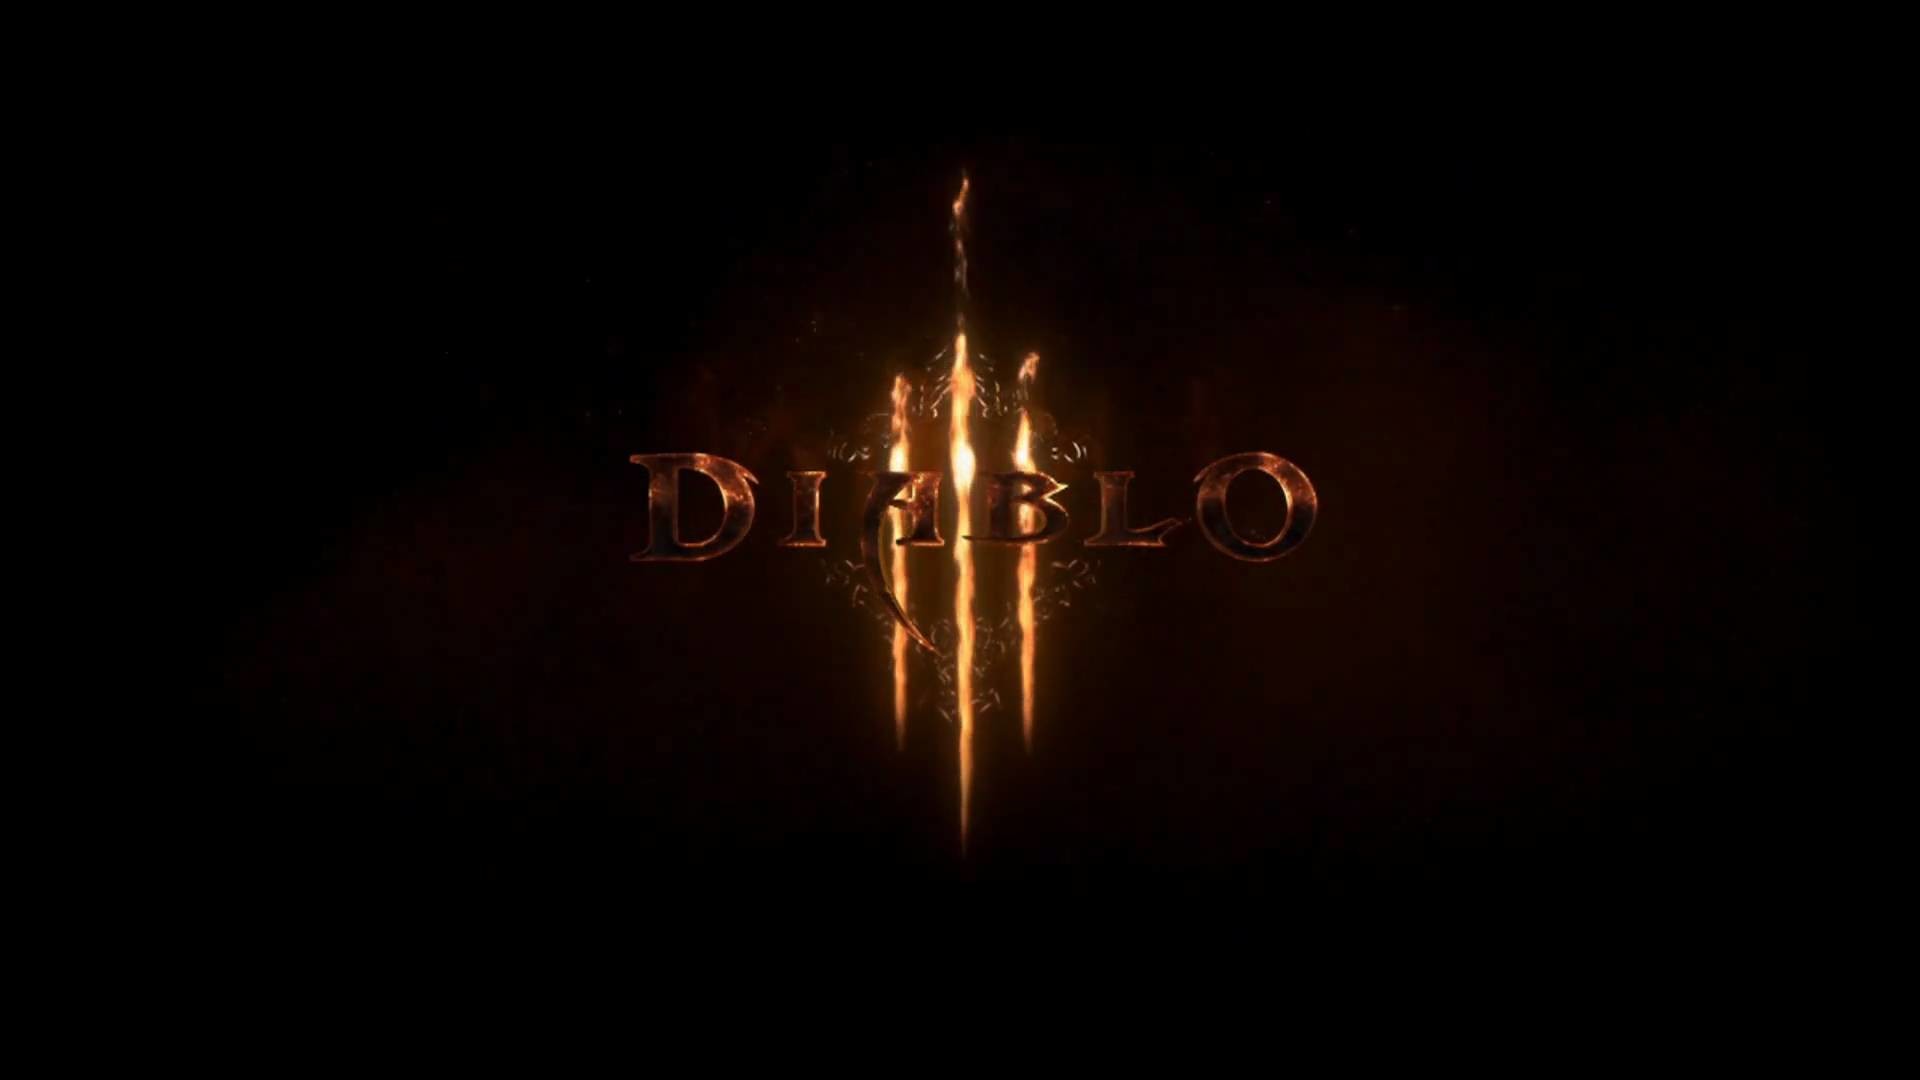 1920x1080 Diablo 3 logo animated wallpaper 1080p 